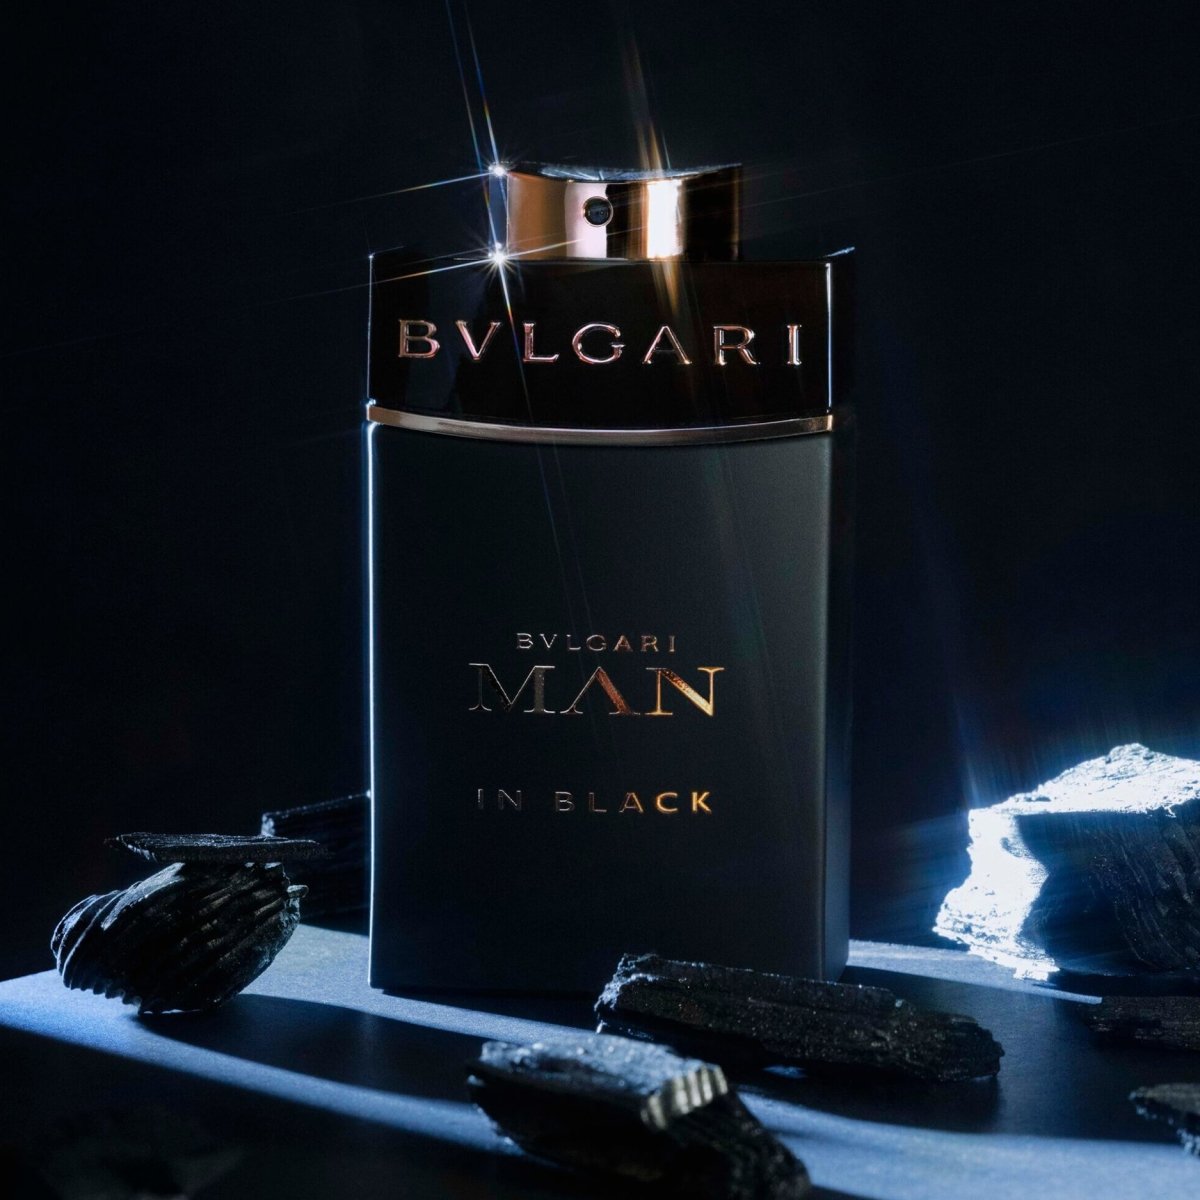 Bvlgari Man In Black Travel Set | My Perfume Shop Australia